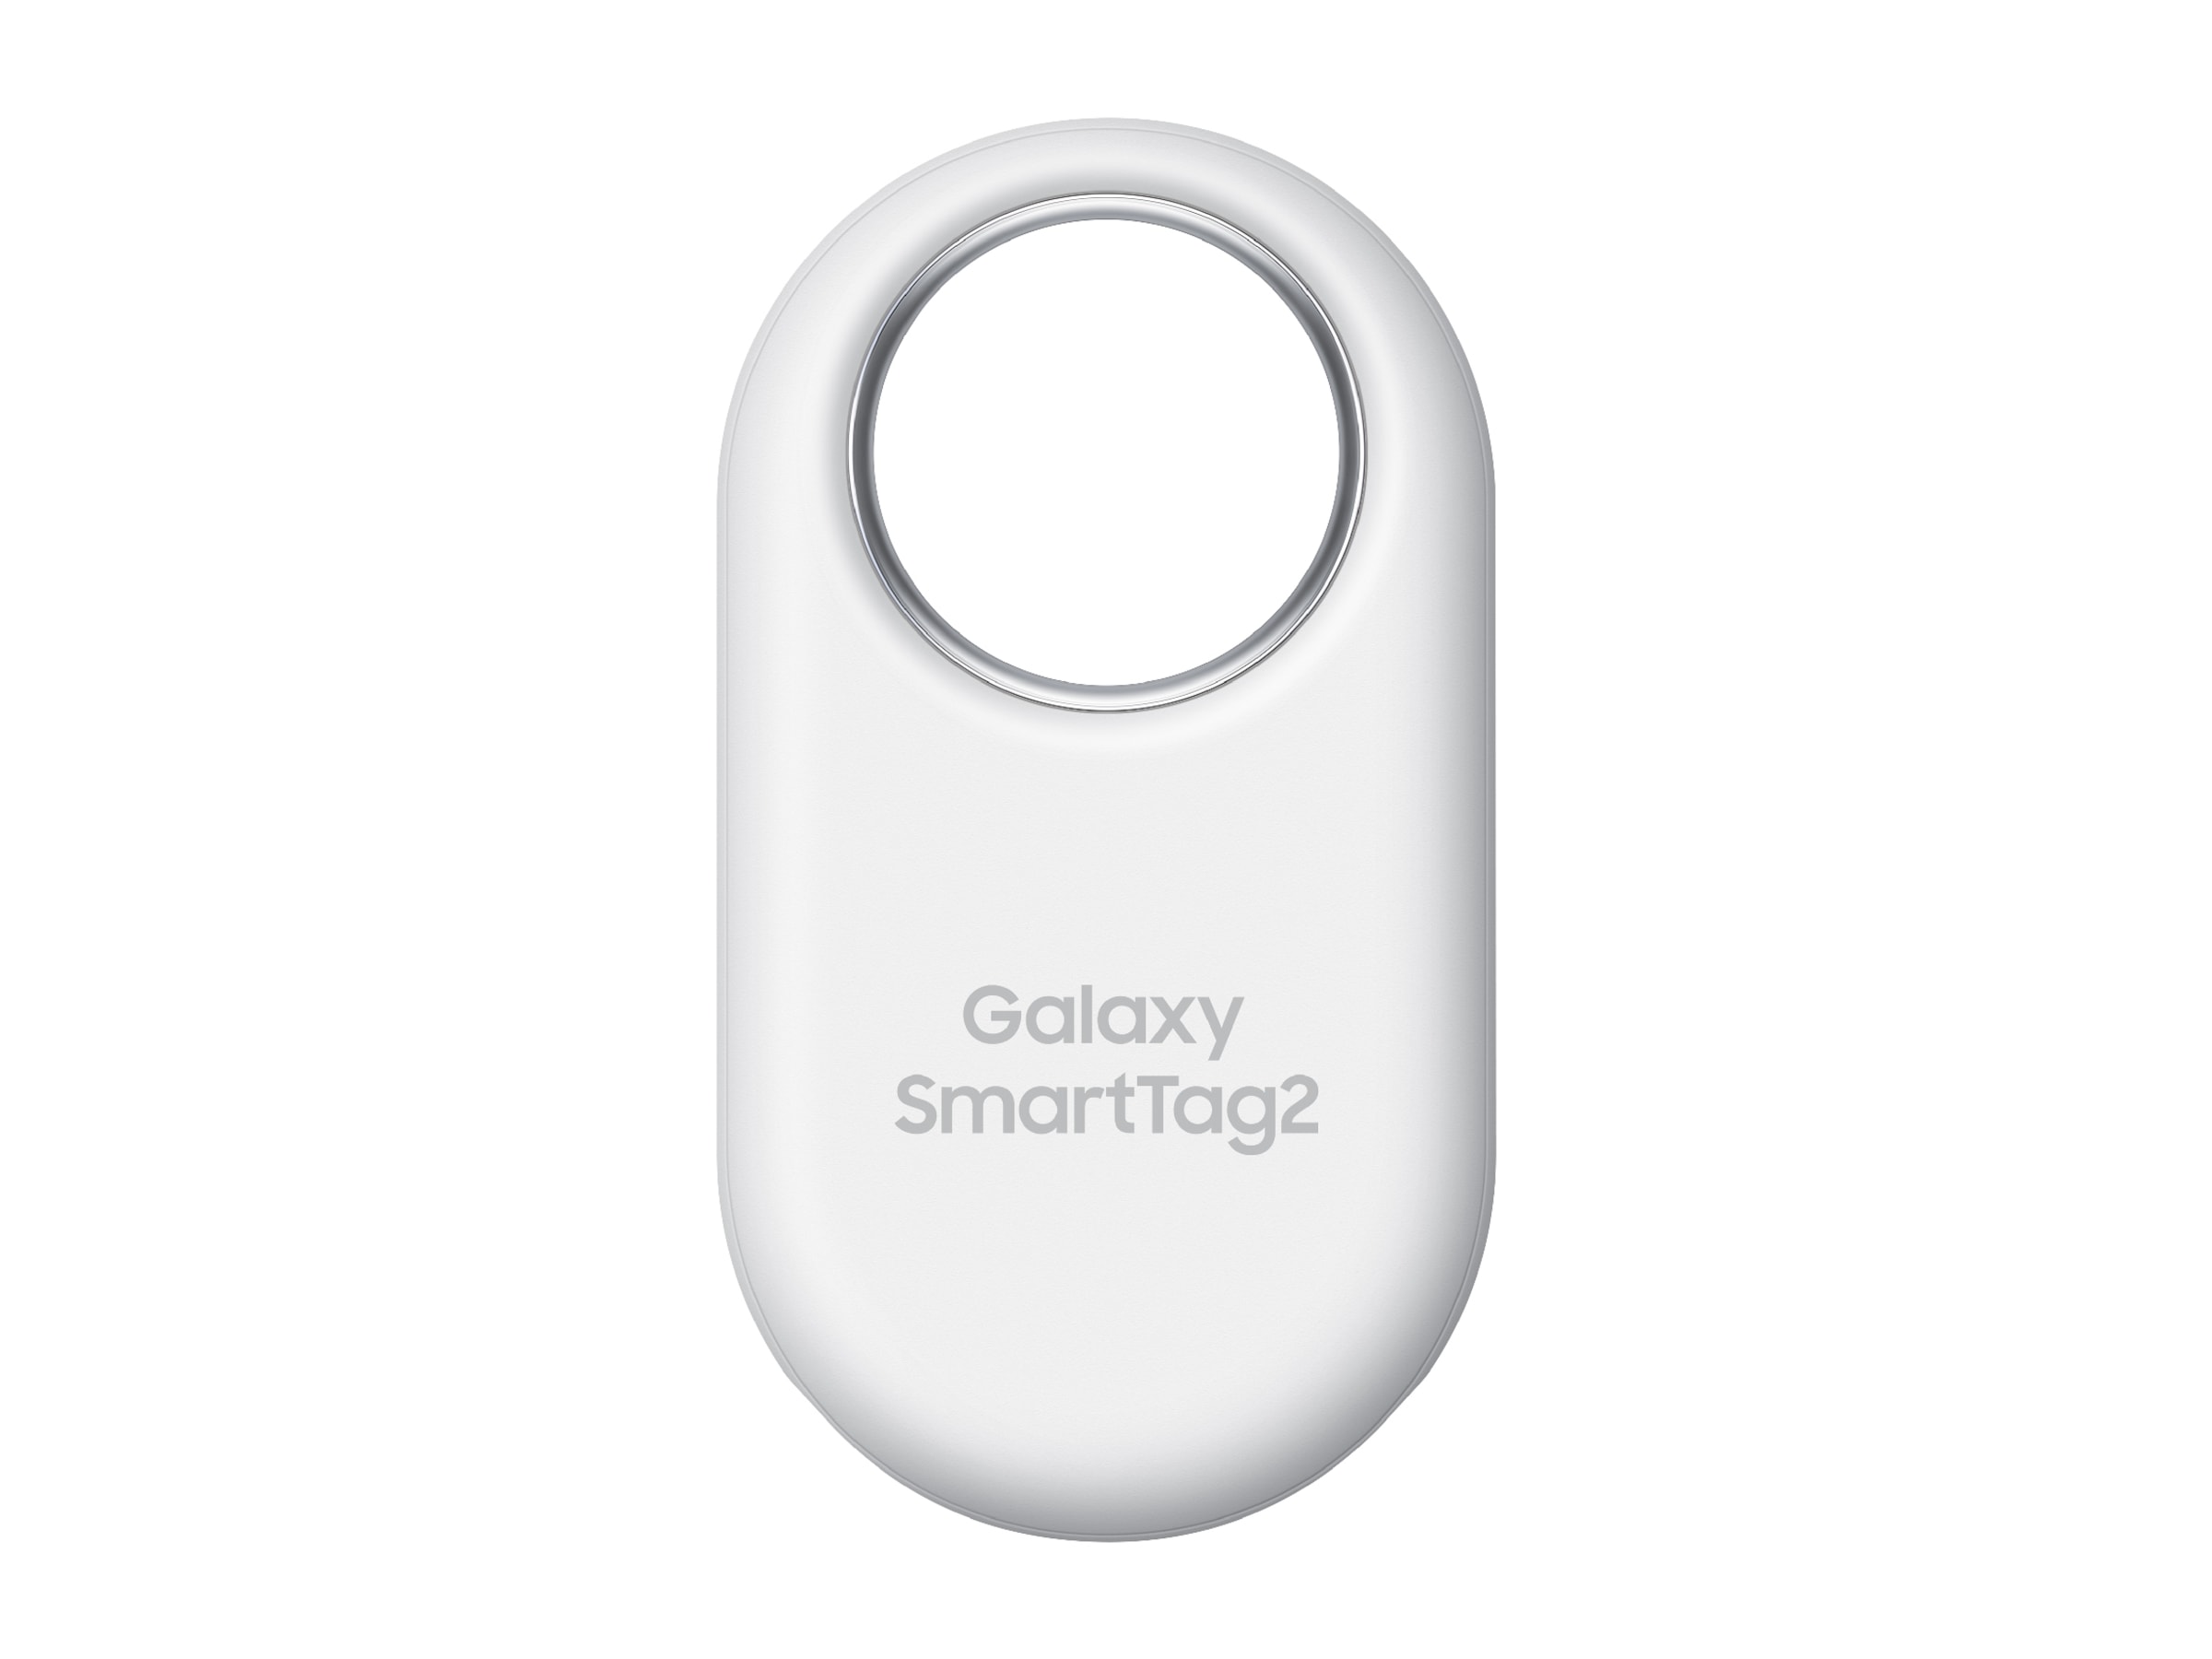 Samsung - Galaxy SmartTag2 White